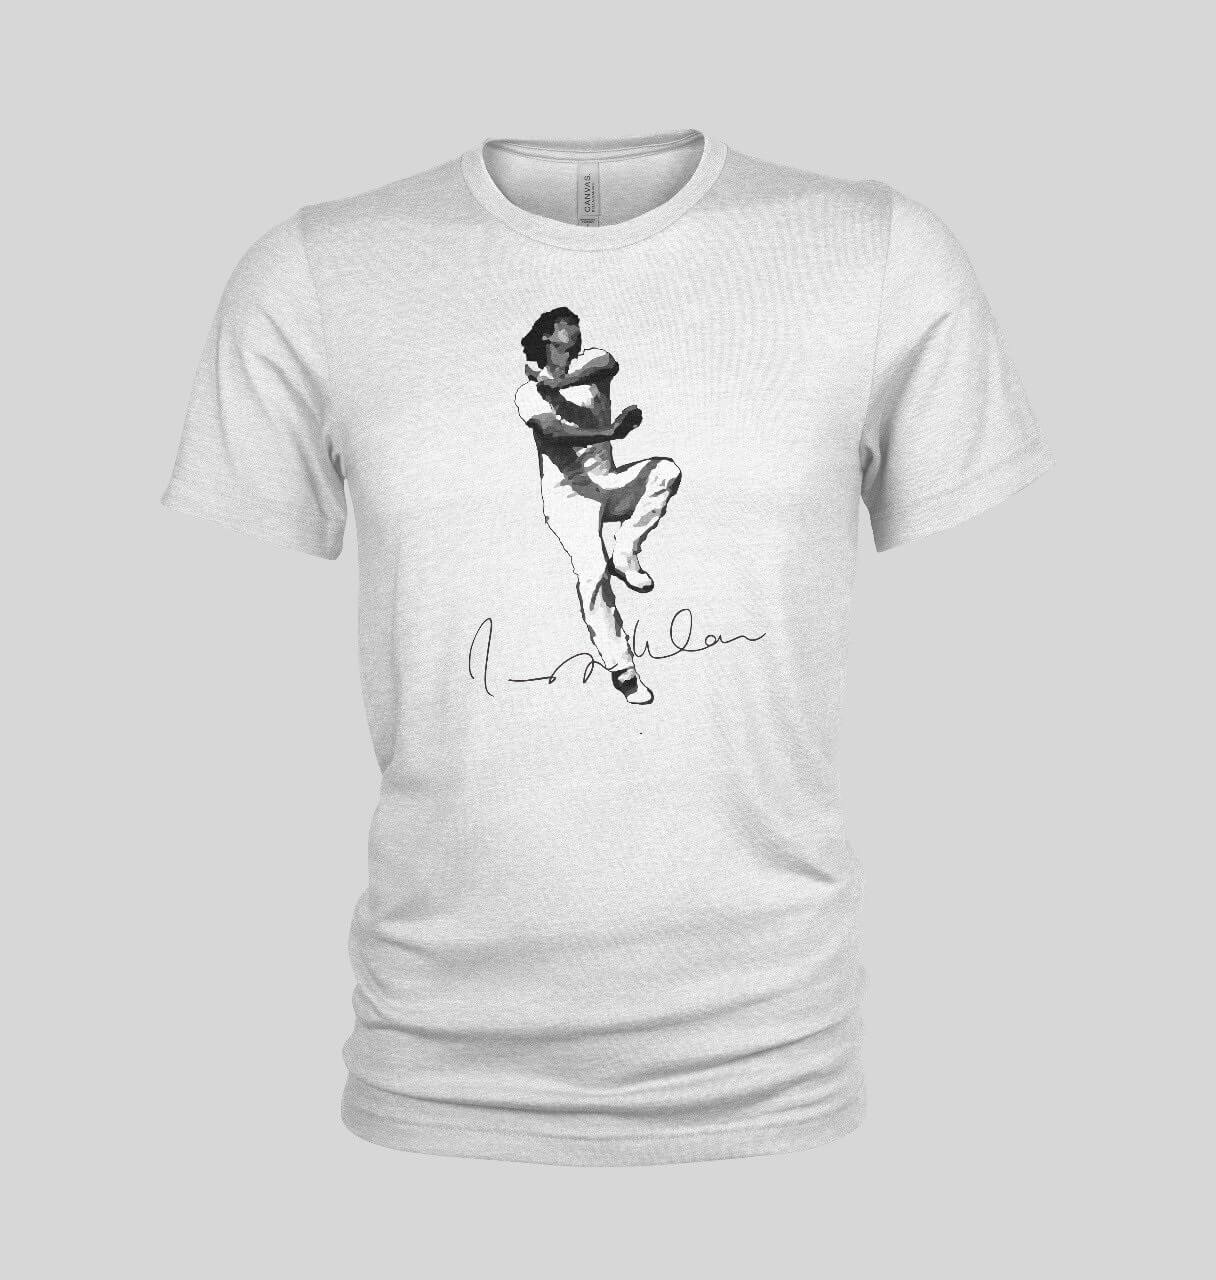 Imran Khan Bowling Action Logo T-Shirt